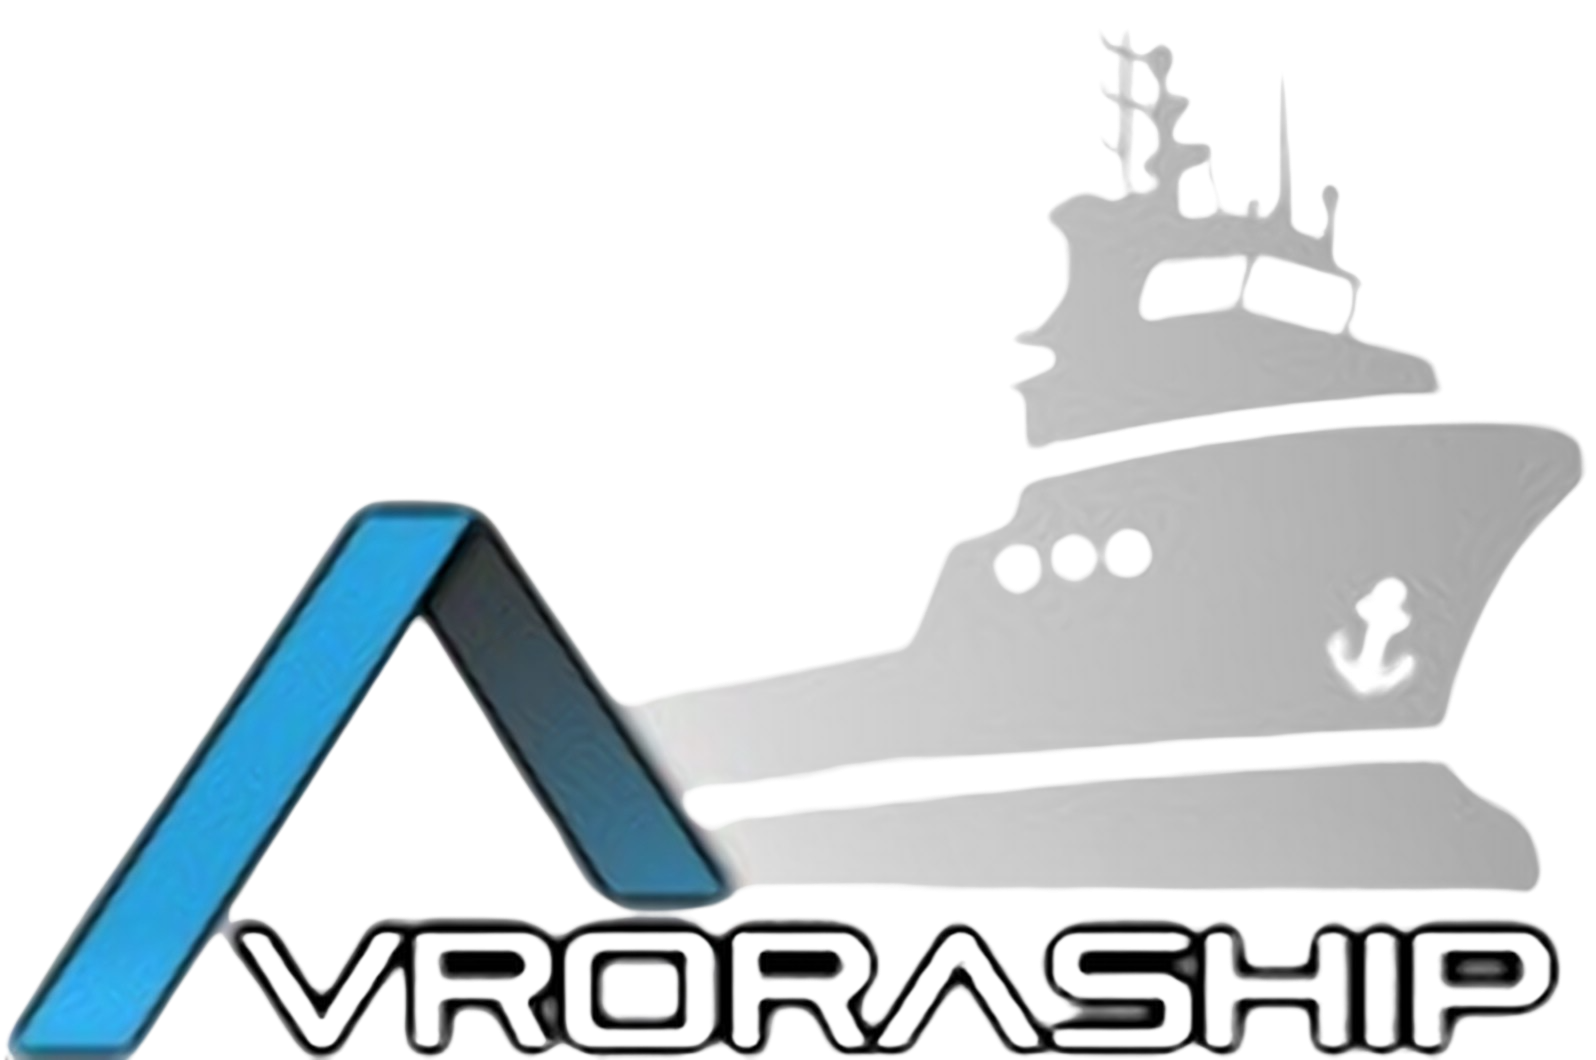 Avroraship and Repair , Steel Works, Ship Machinery, Ship Electric Company